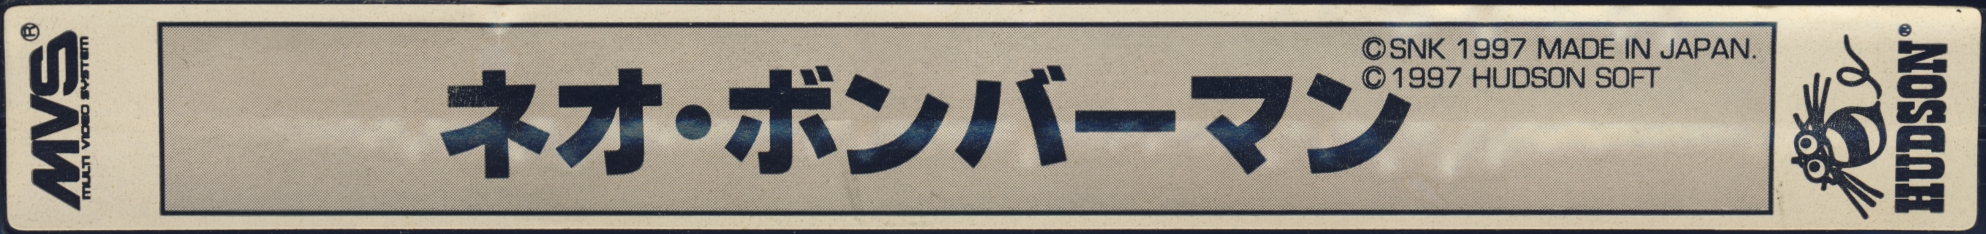 Neo bomberman jp label.jpg